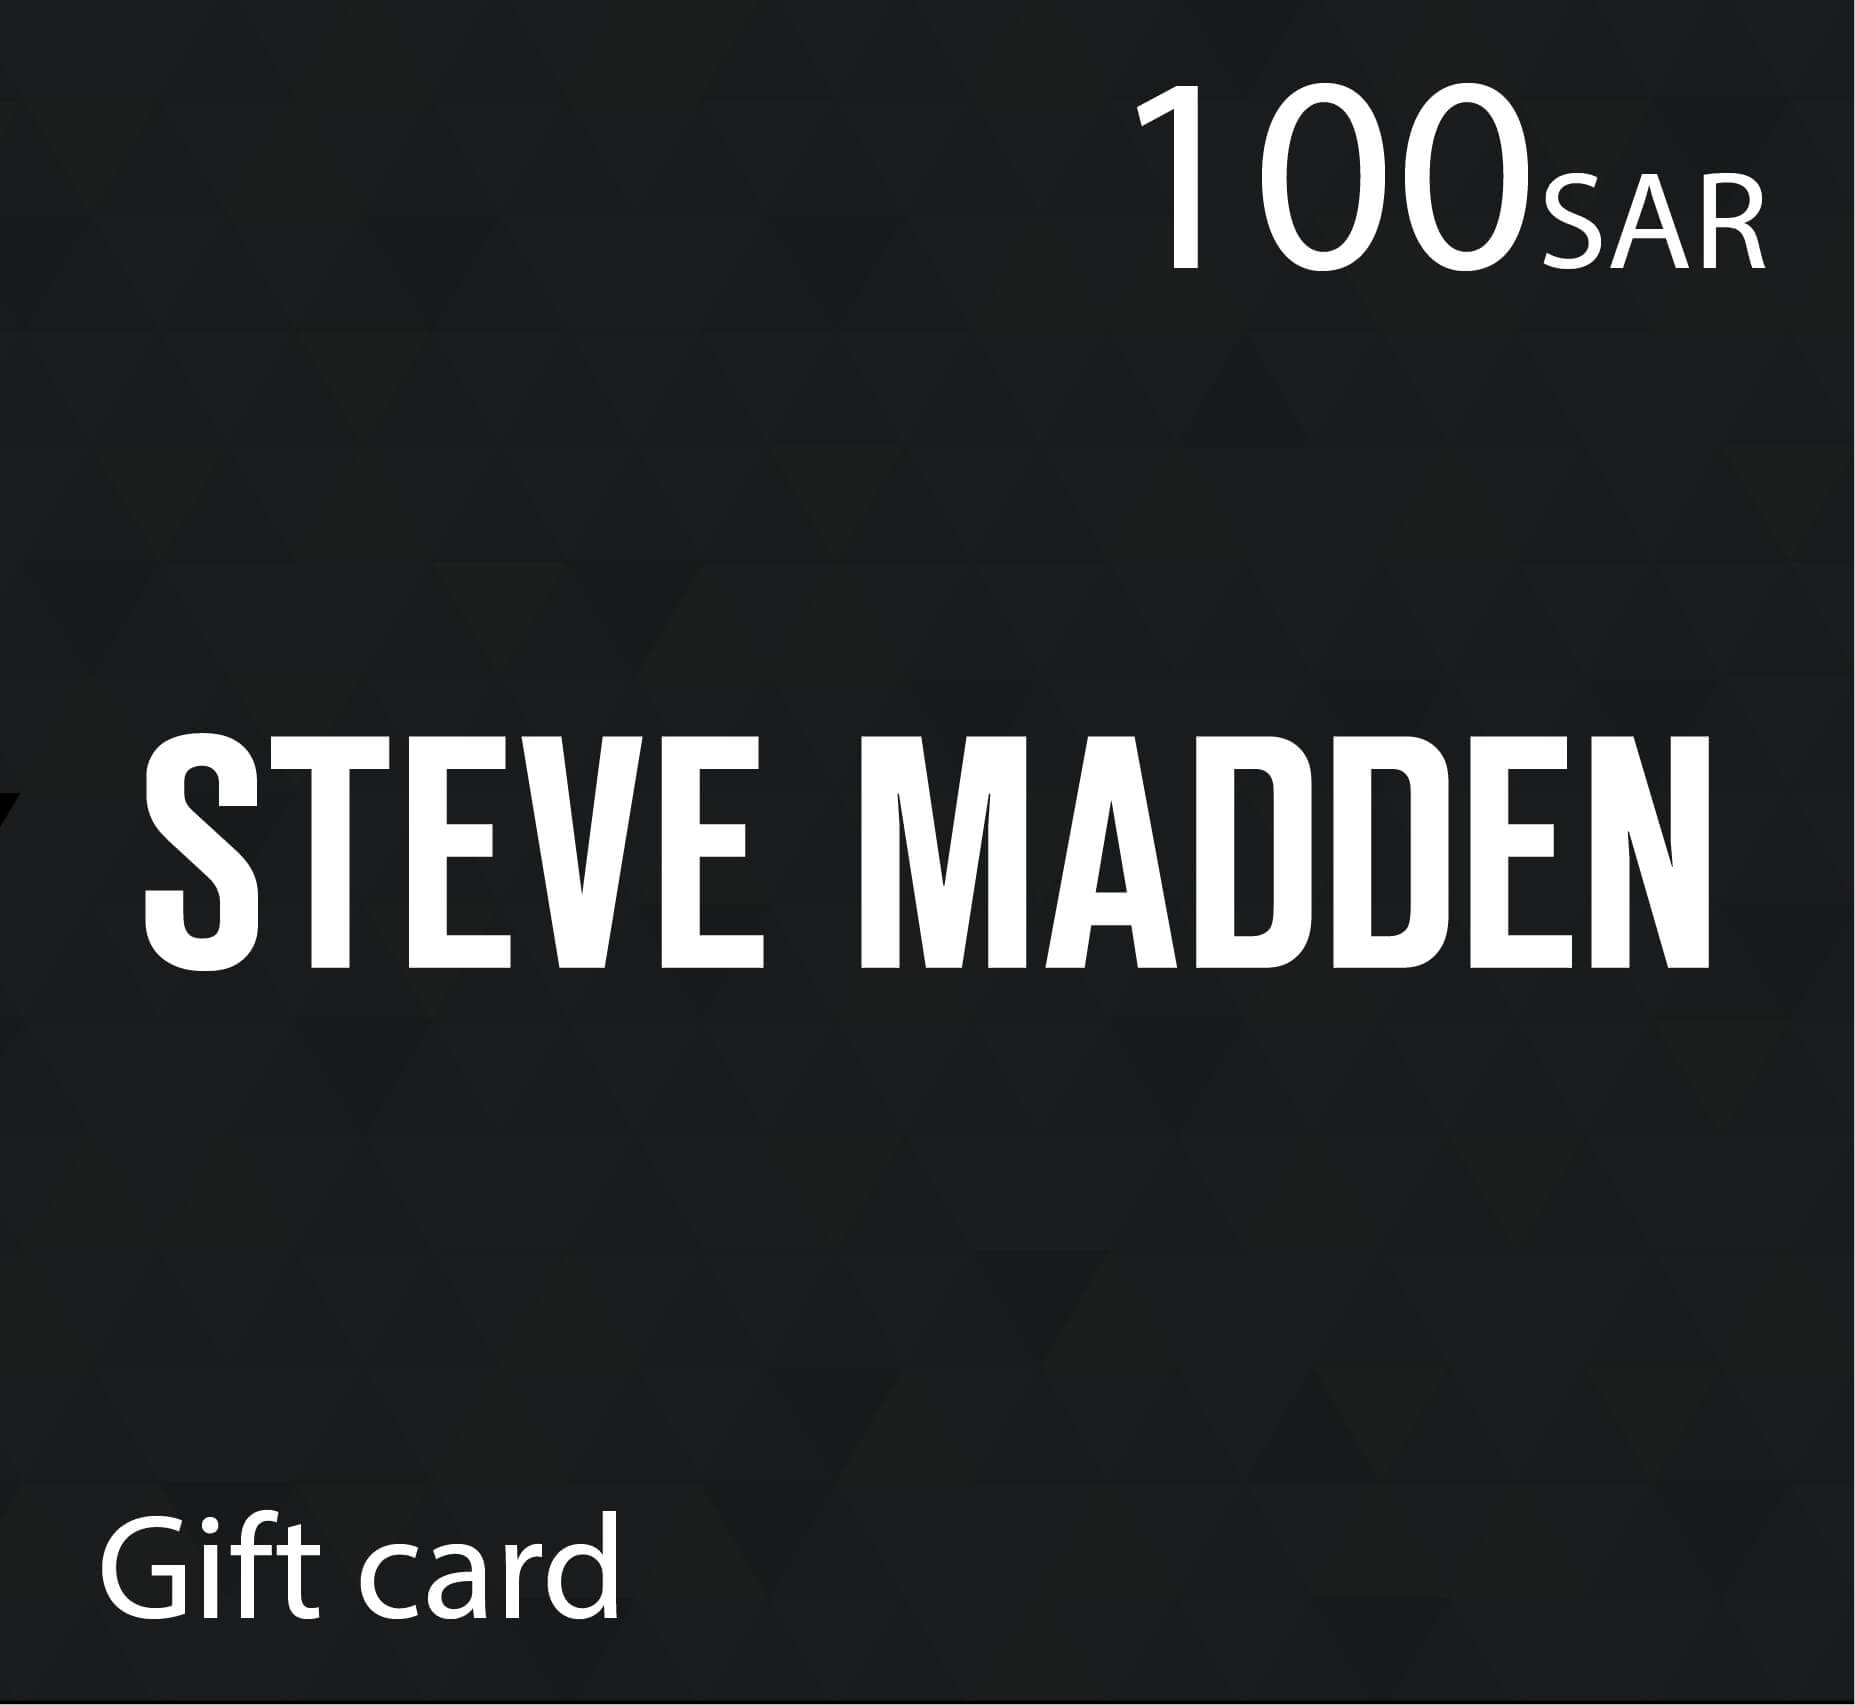 بطاقة هدايا ستيف مادن Steve Madden - قسيمة شراء ستيف مادن - 100 ريال